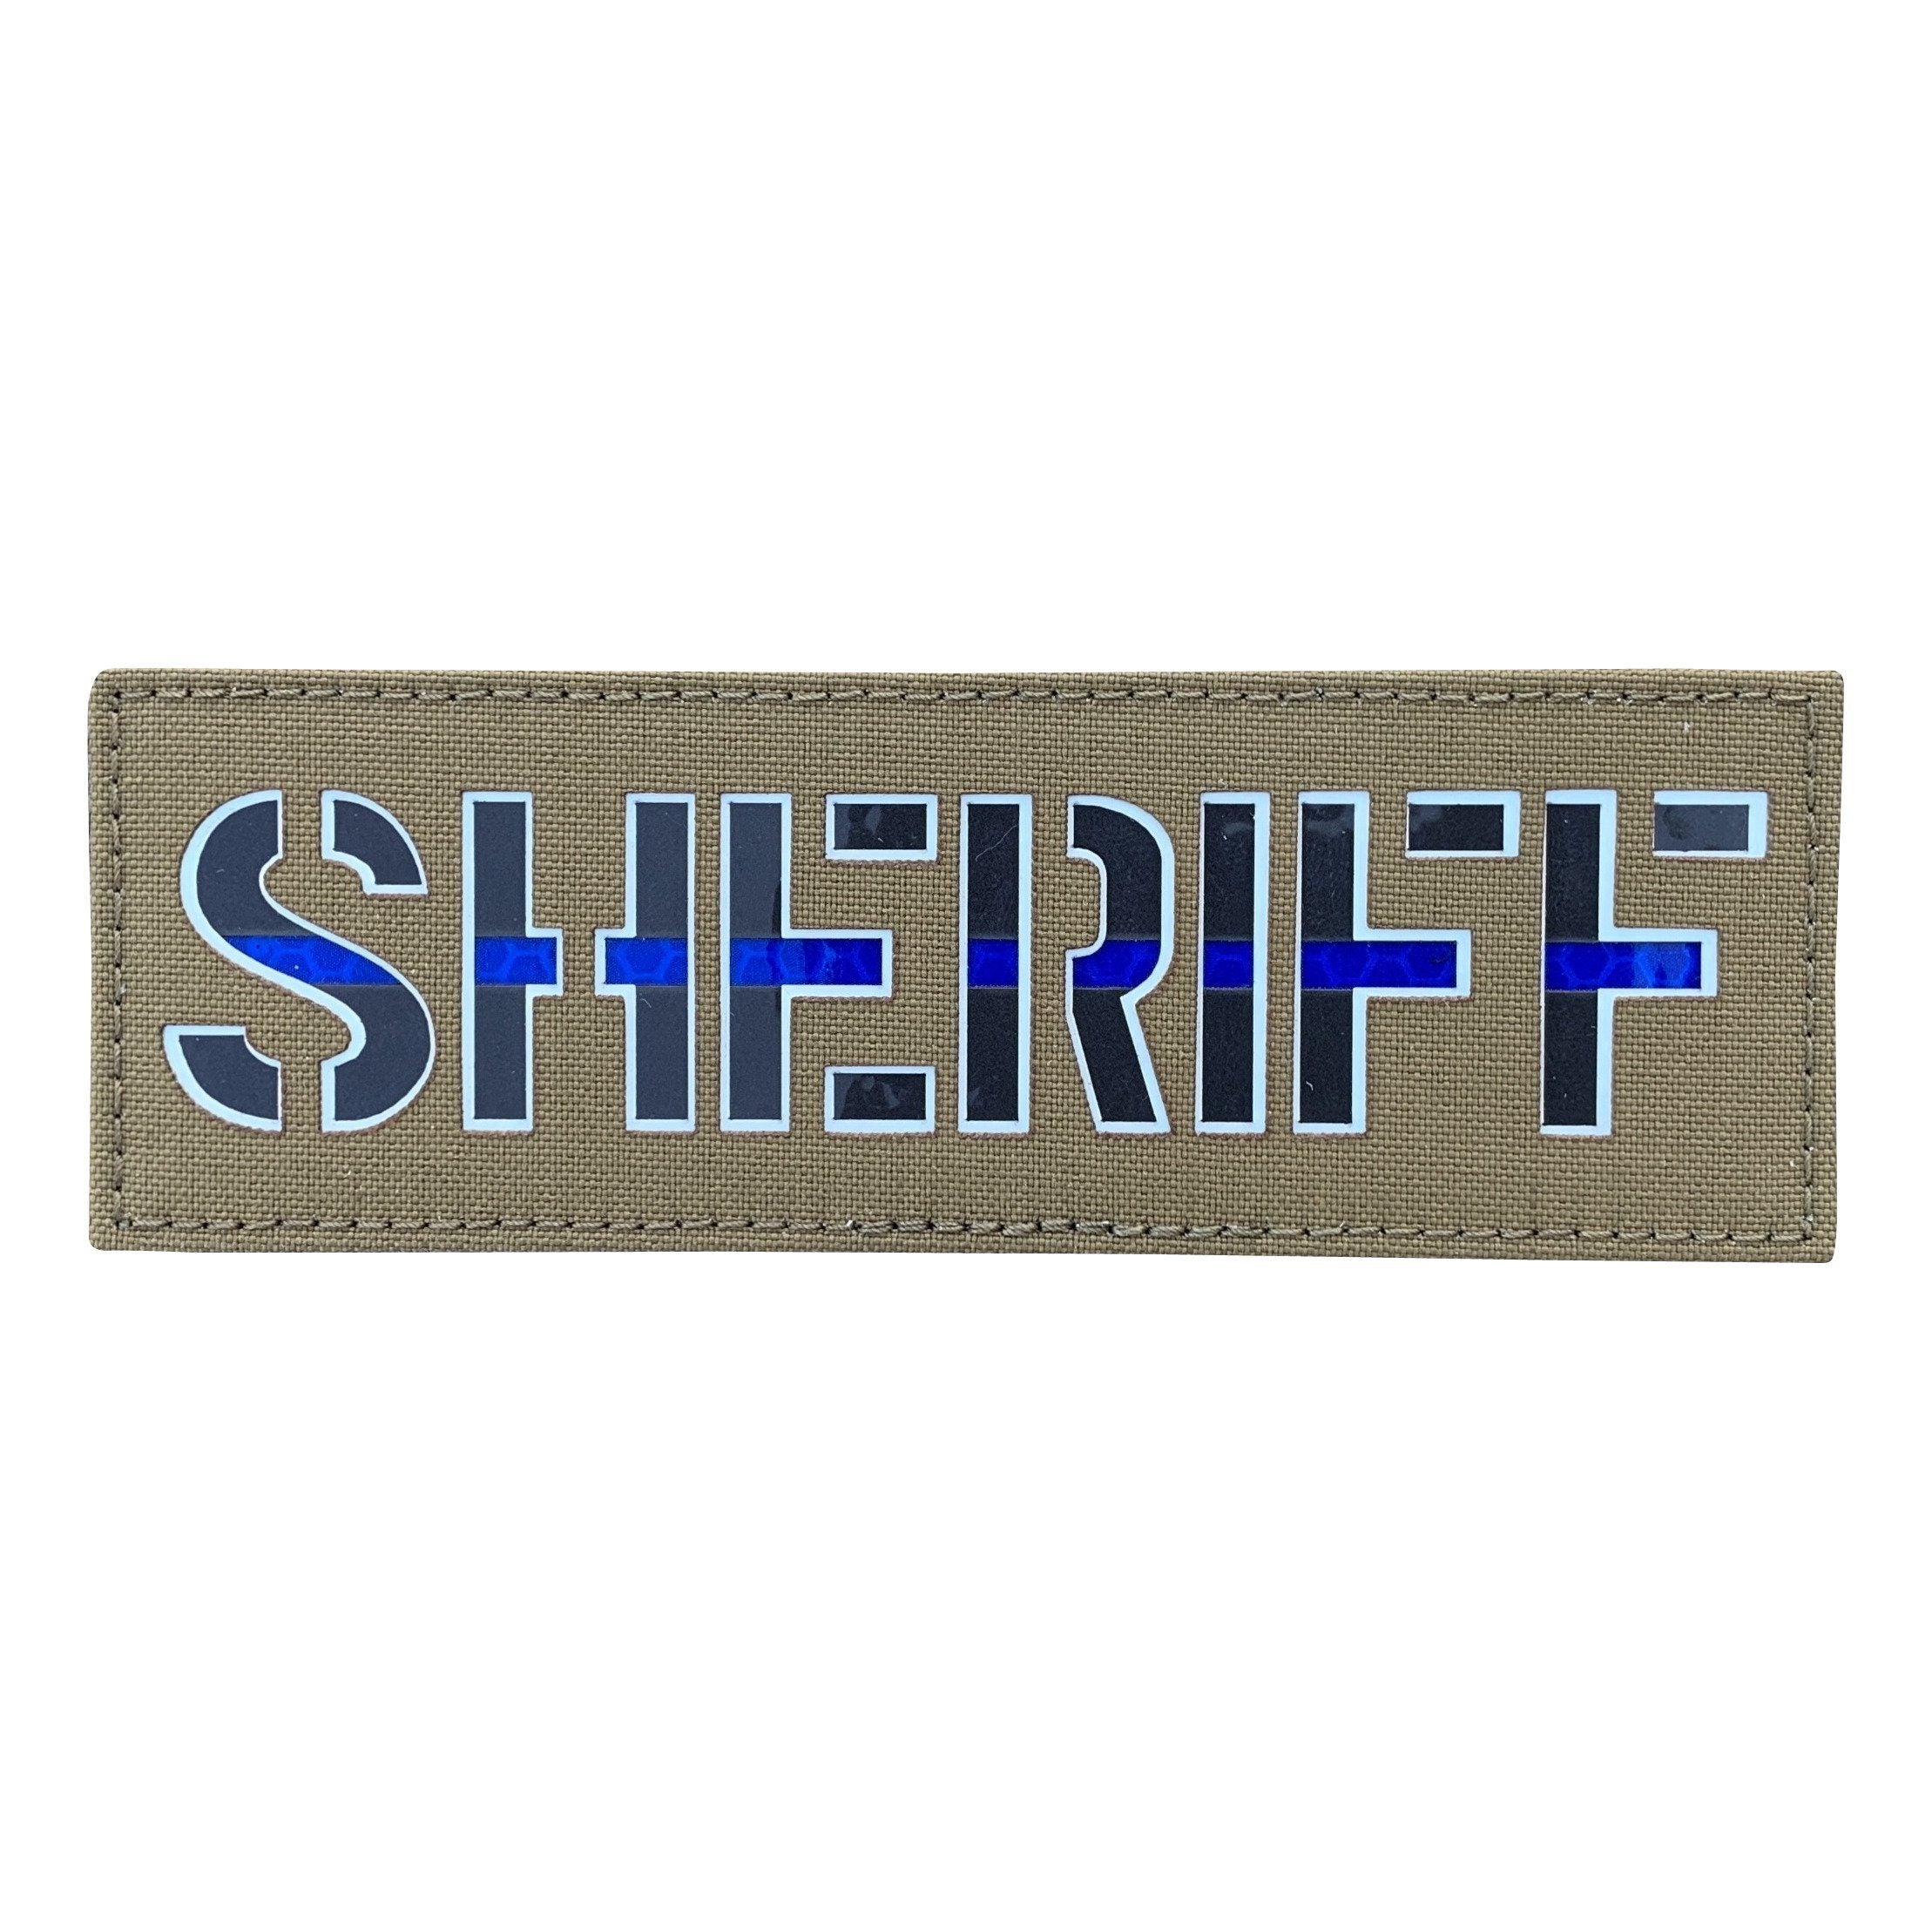 6 x 2 SHERIFF Thin Blue Line Name Tape